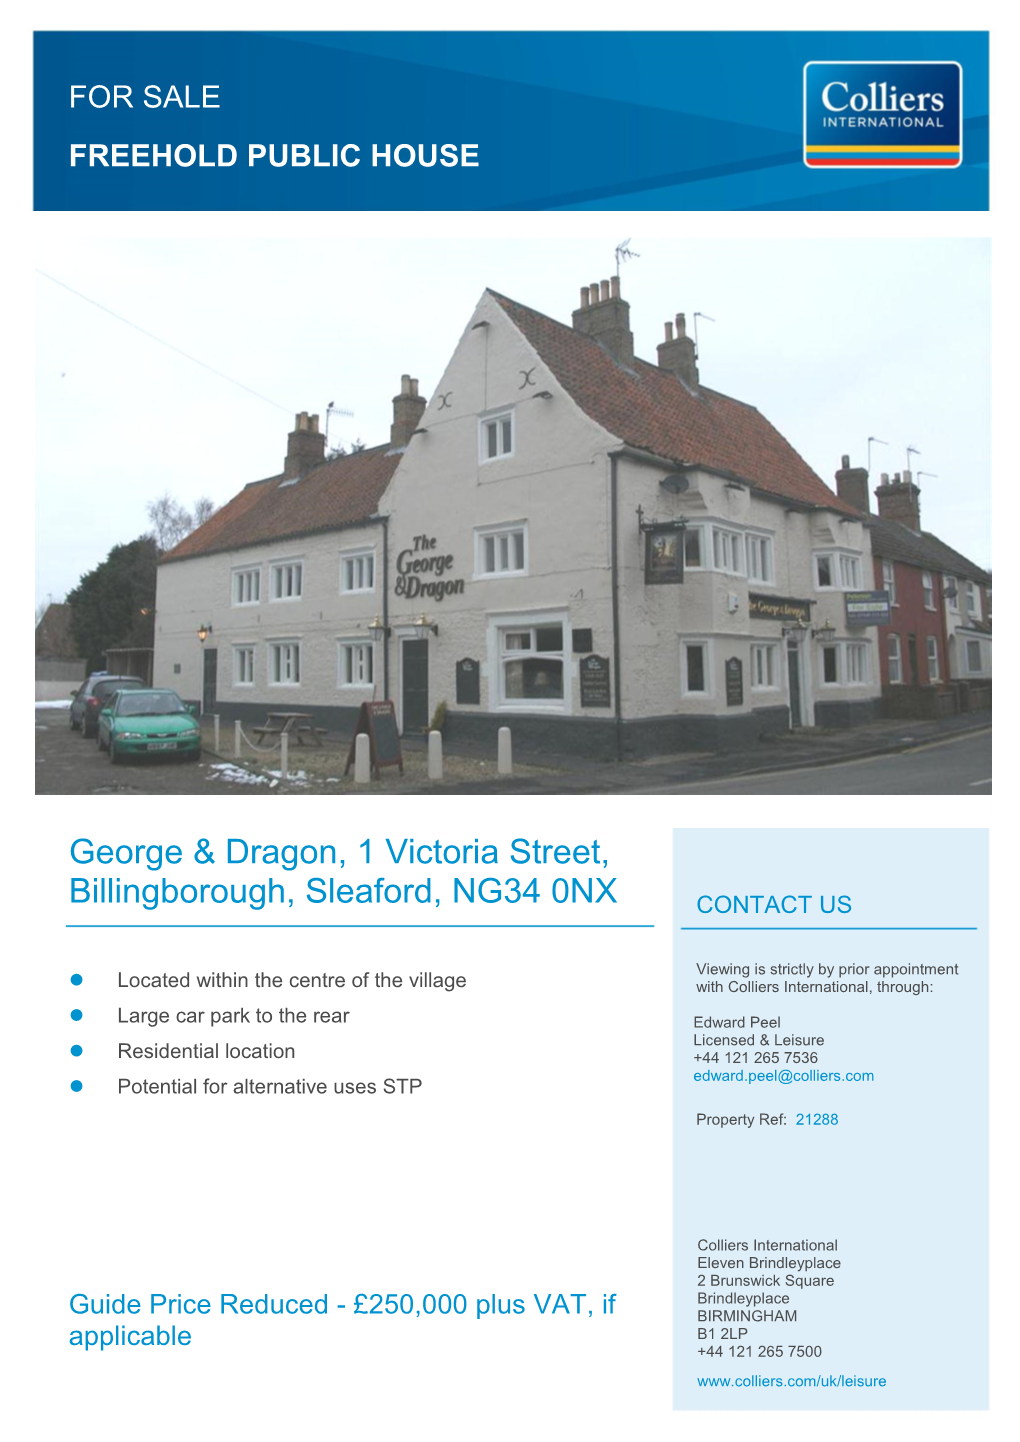 George & Dragon, 1 Victoria Street, Billingborough, Sleaford, NG34